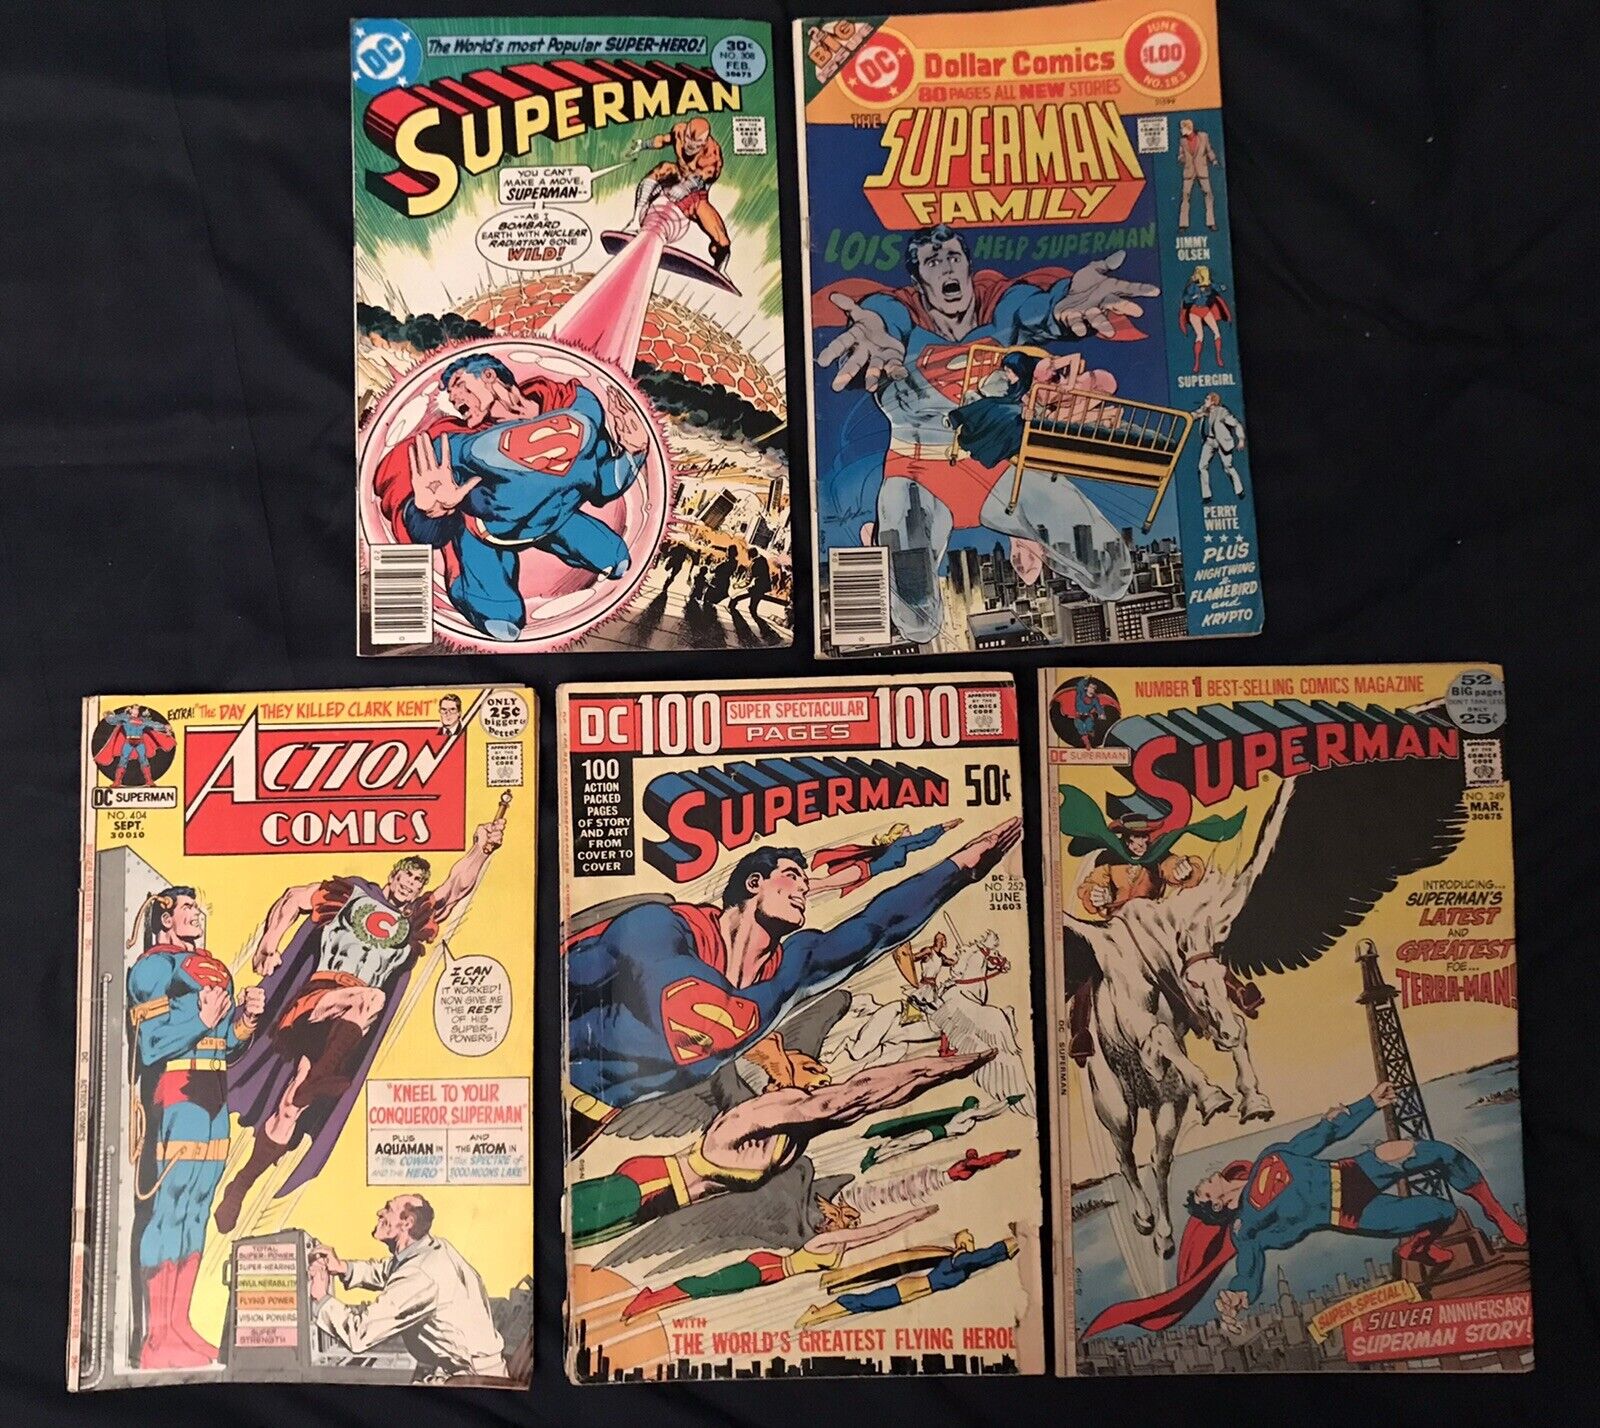 NEAL ADAMS SUPERMAN & ACTION lot of 5 comics: #249, 252, 308, 404, 183...AVG VG